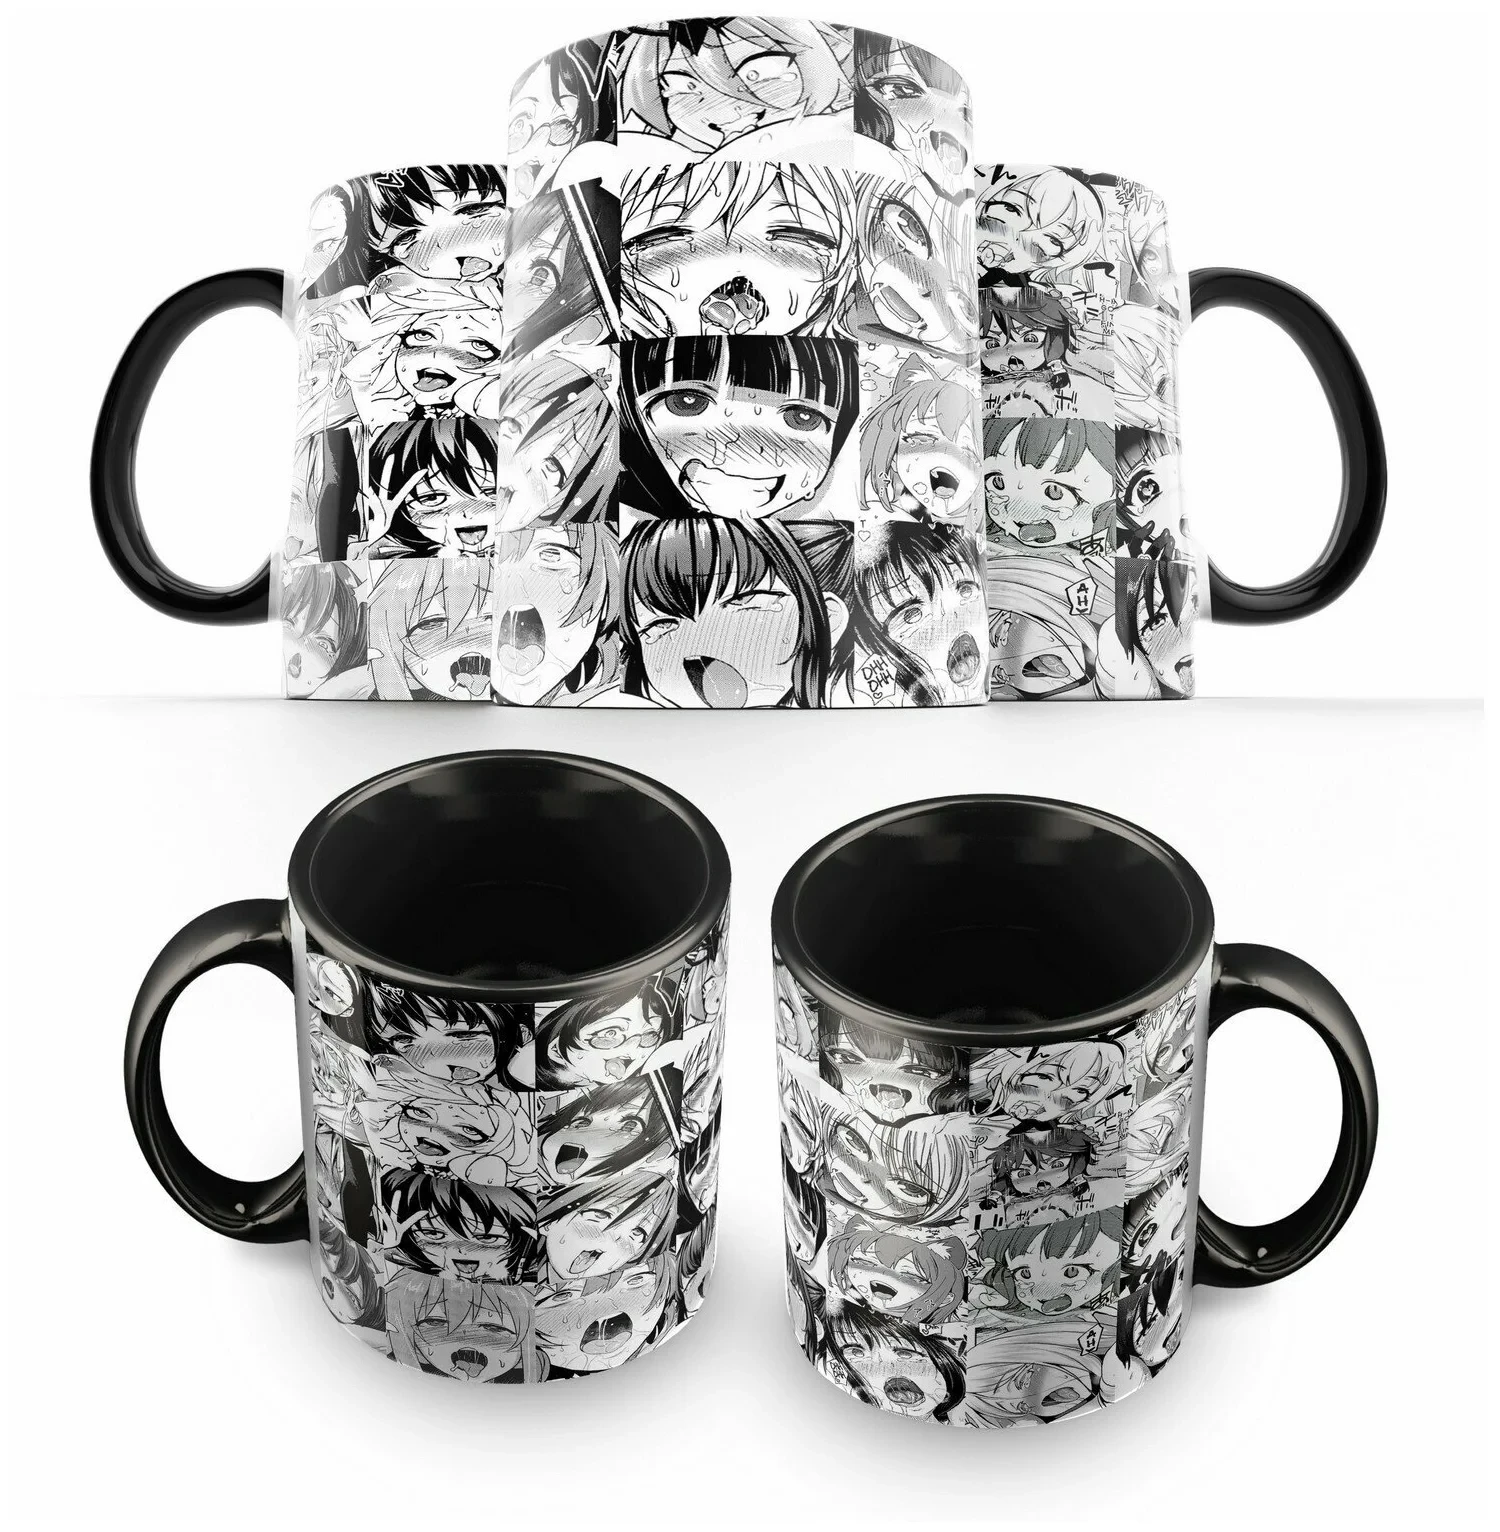 https://ae01.alicdn.com/kf/Se318a0bd96f14554a4e0caf7ea563c1fM/Anime-Girl-Coffee-Mug-11oz-Ceramic-Creative-Coffee-Mug-Anime-Men-or-Boy-Fan-Birthday-Gift.jpg